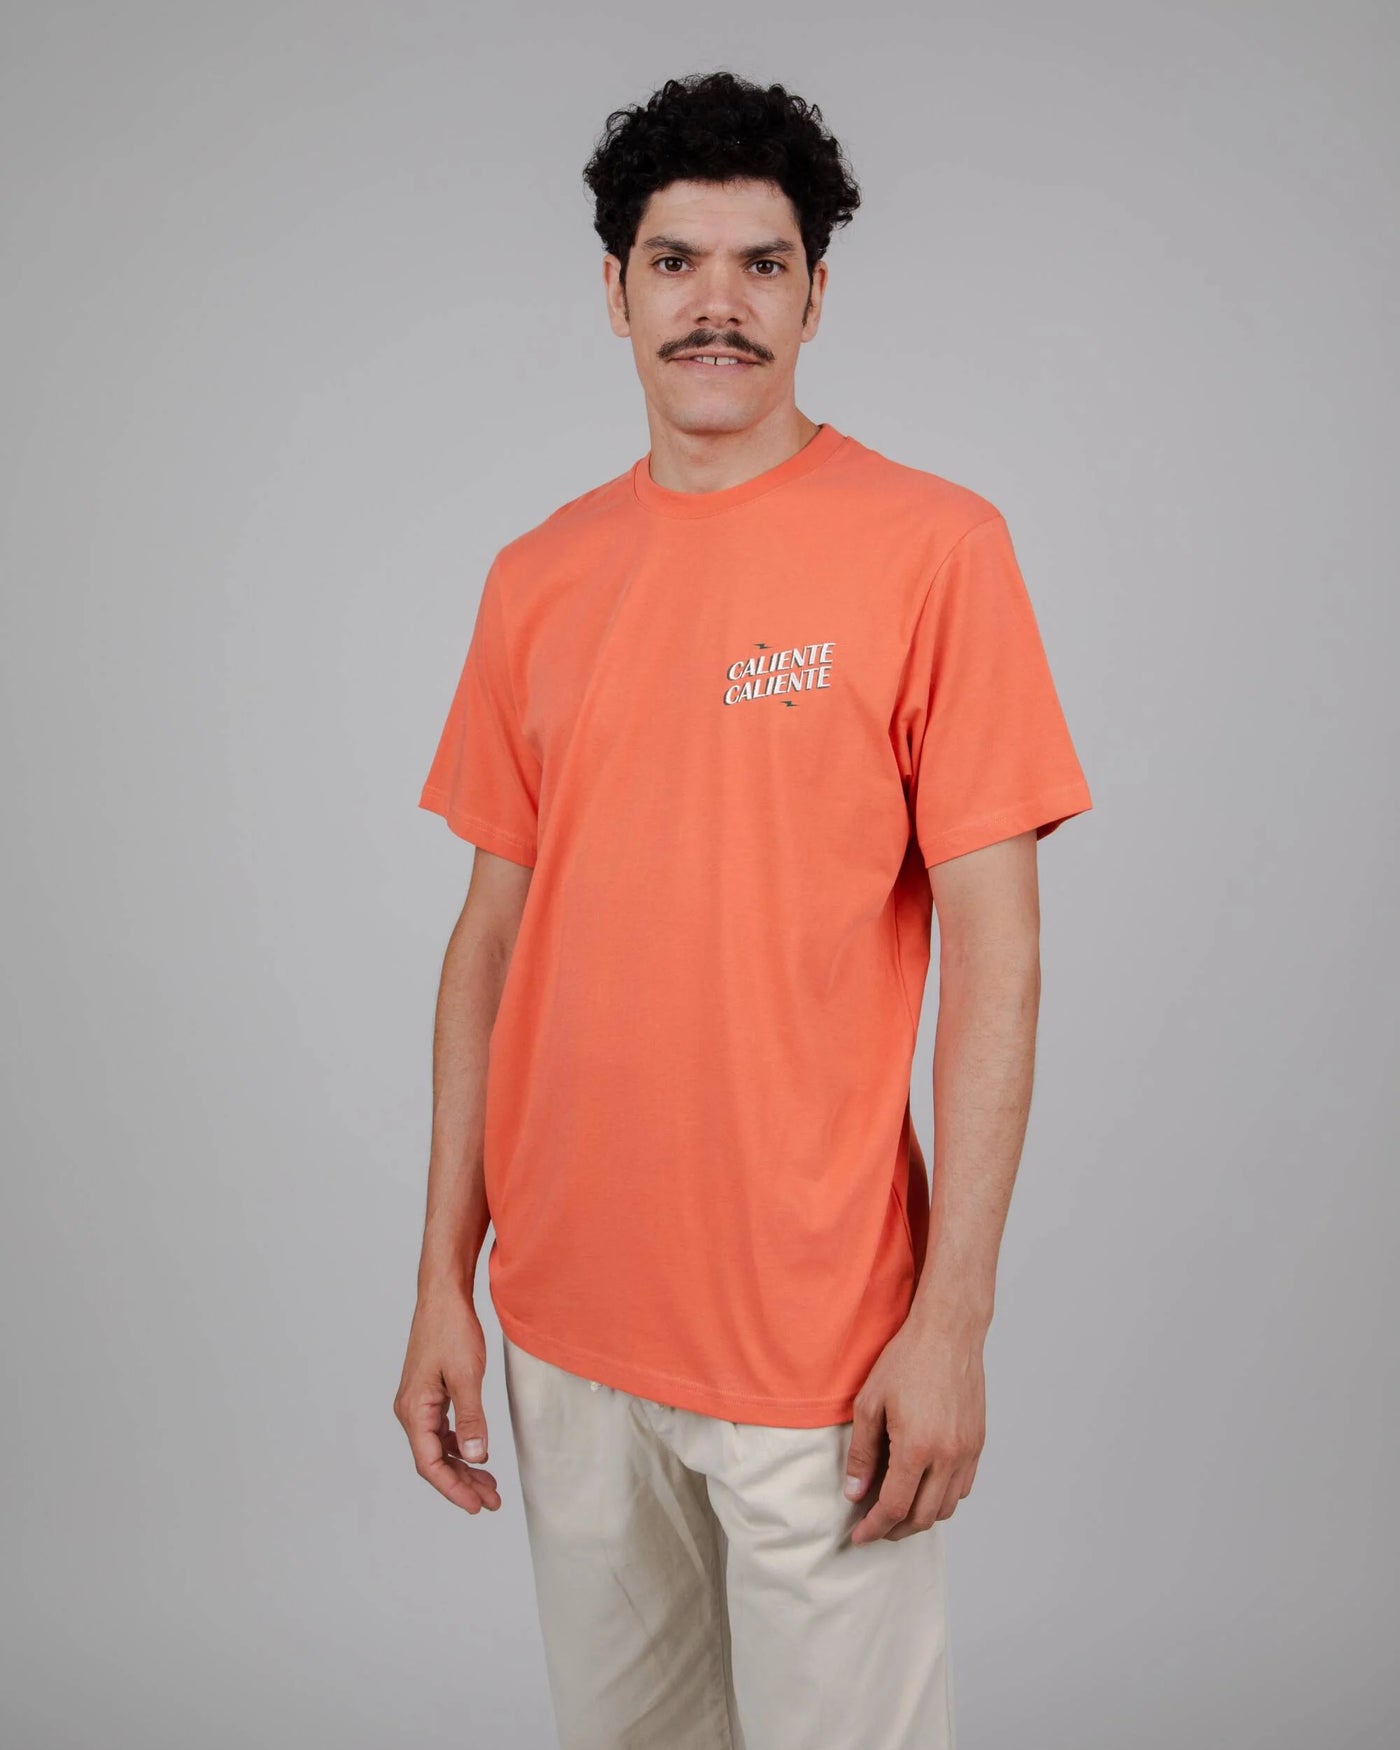 Camiseta Brava Caliente Caliente Naranja